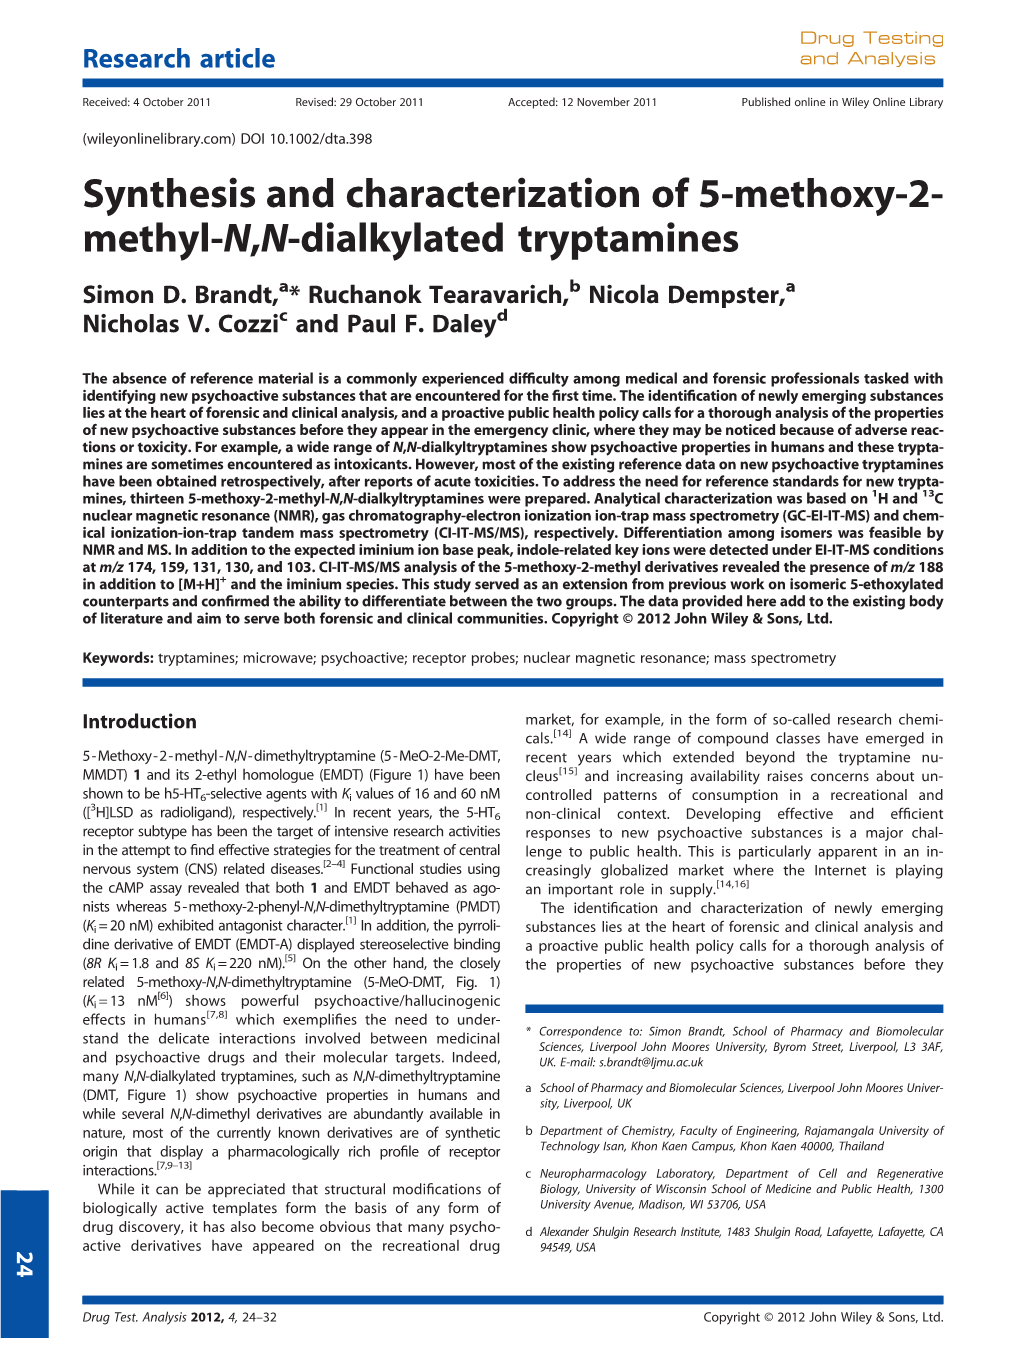 Synthesis and Characterization of 5Methoxy2methyln,Ndialkylated